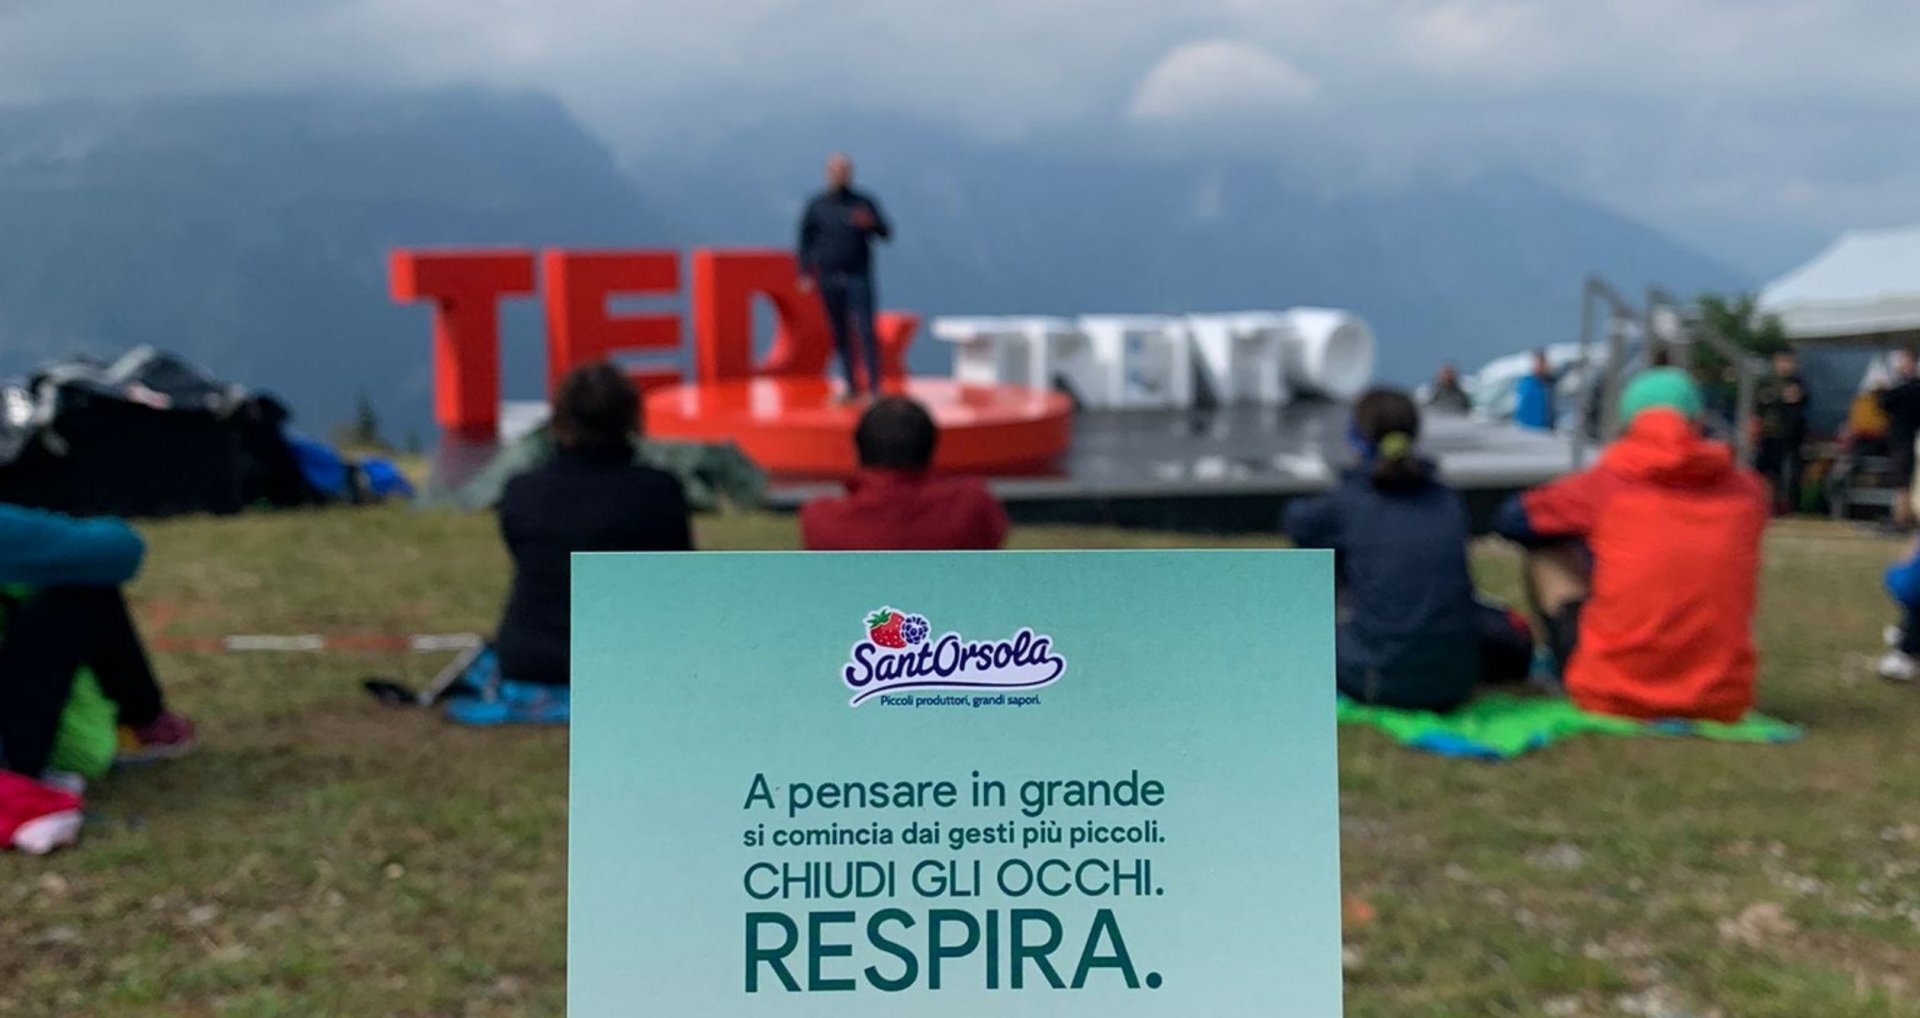 TEDxTrento-Altopiano-Dolomiti-Paganella-Trentino-TEDx-SantOrsola-partner-Respira